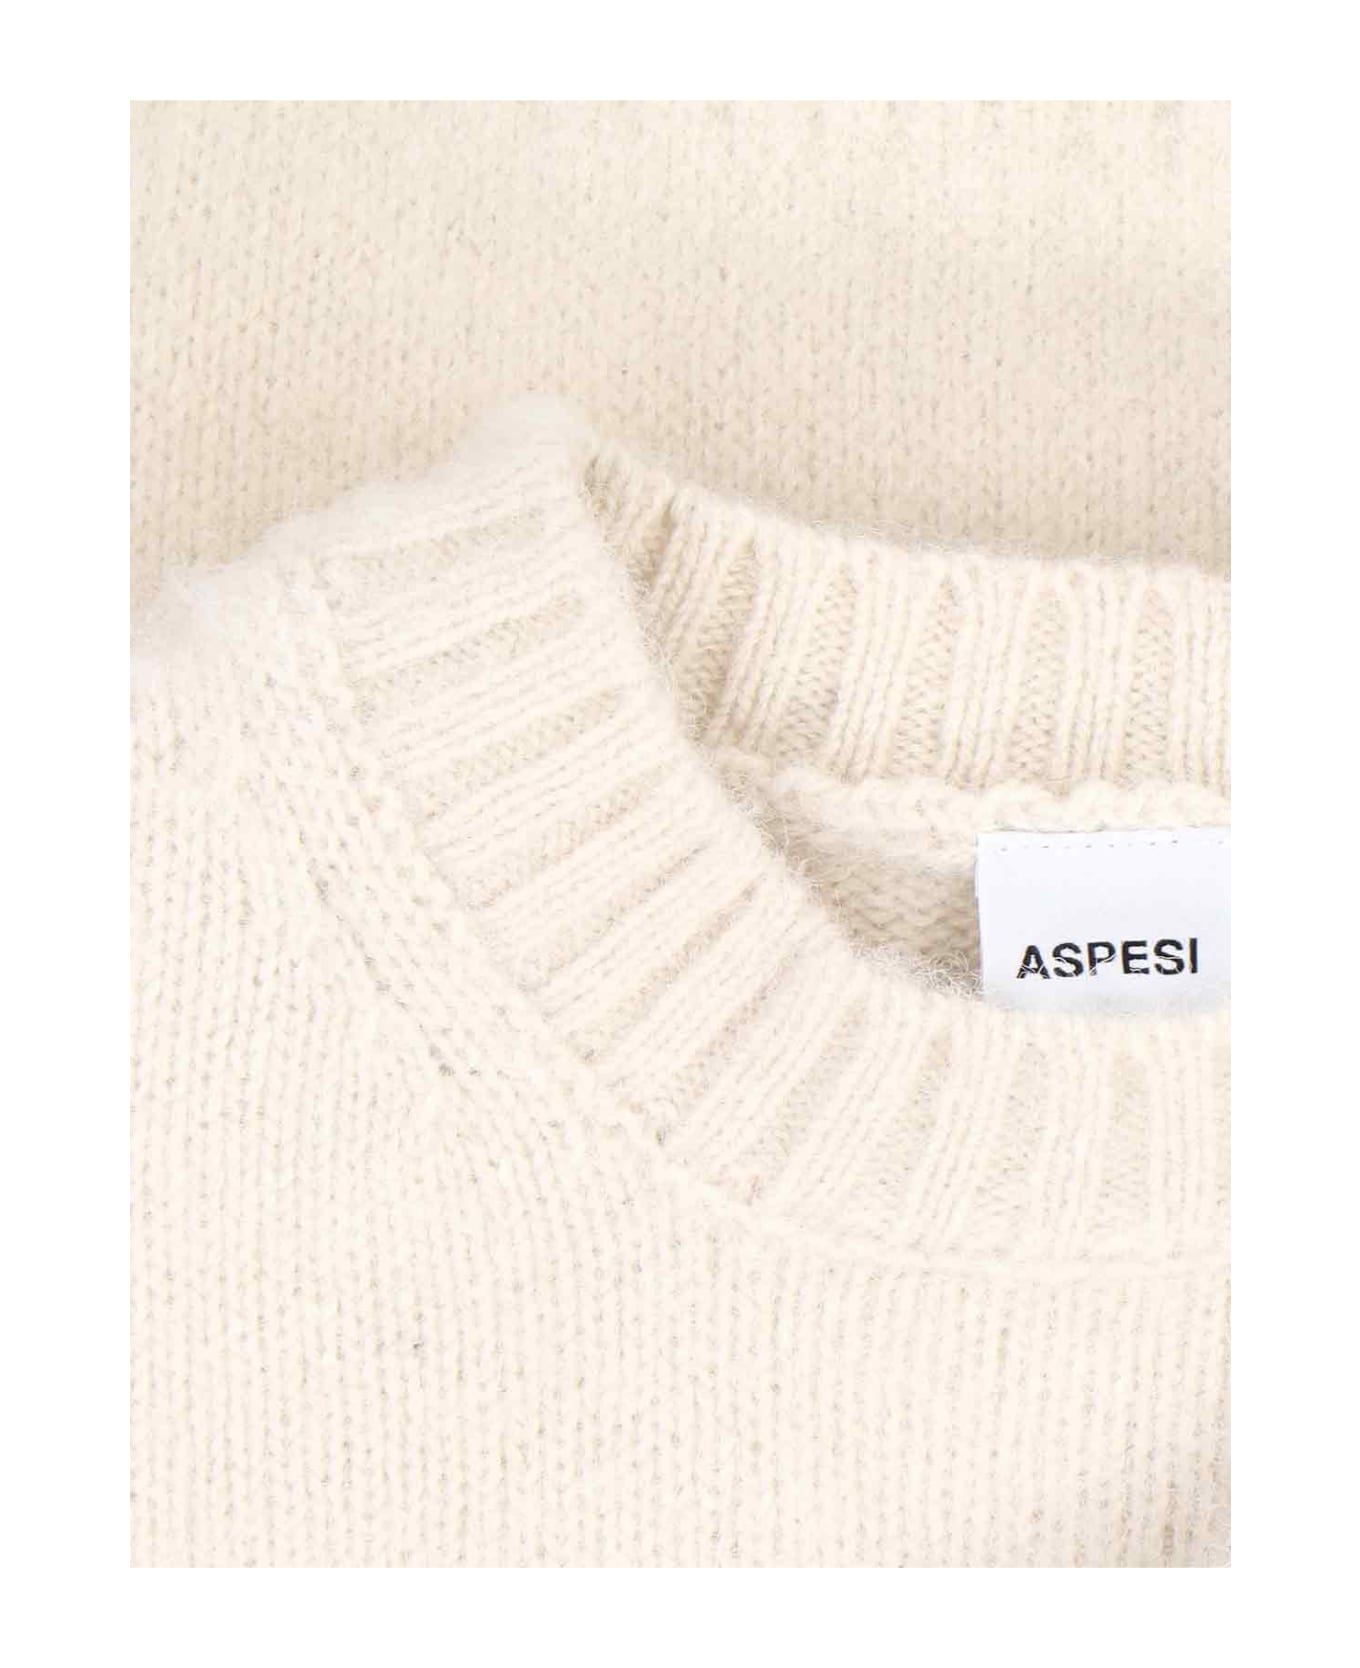 Aspesi 'm183' Sweater - Cream